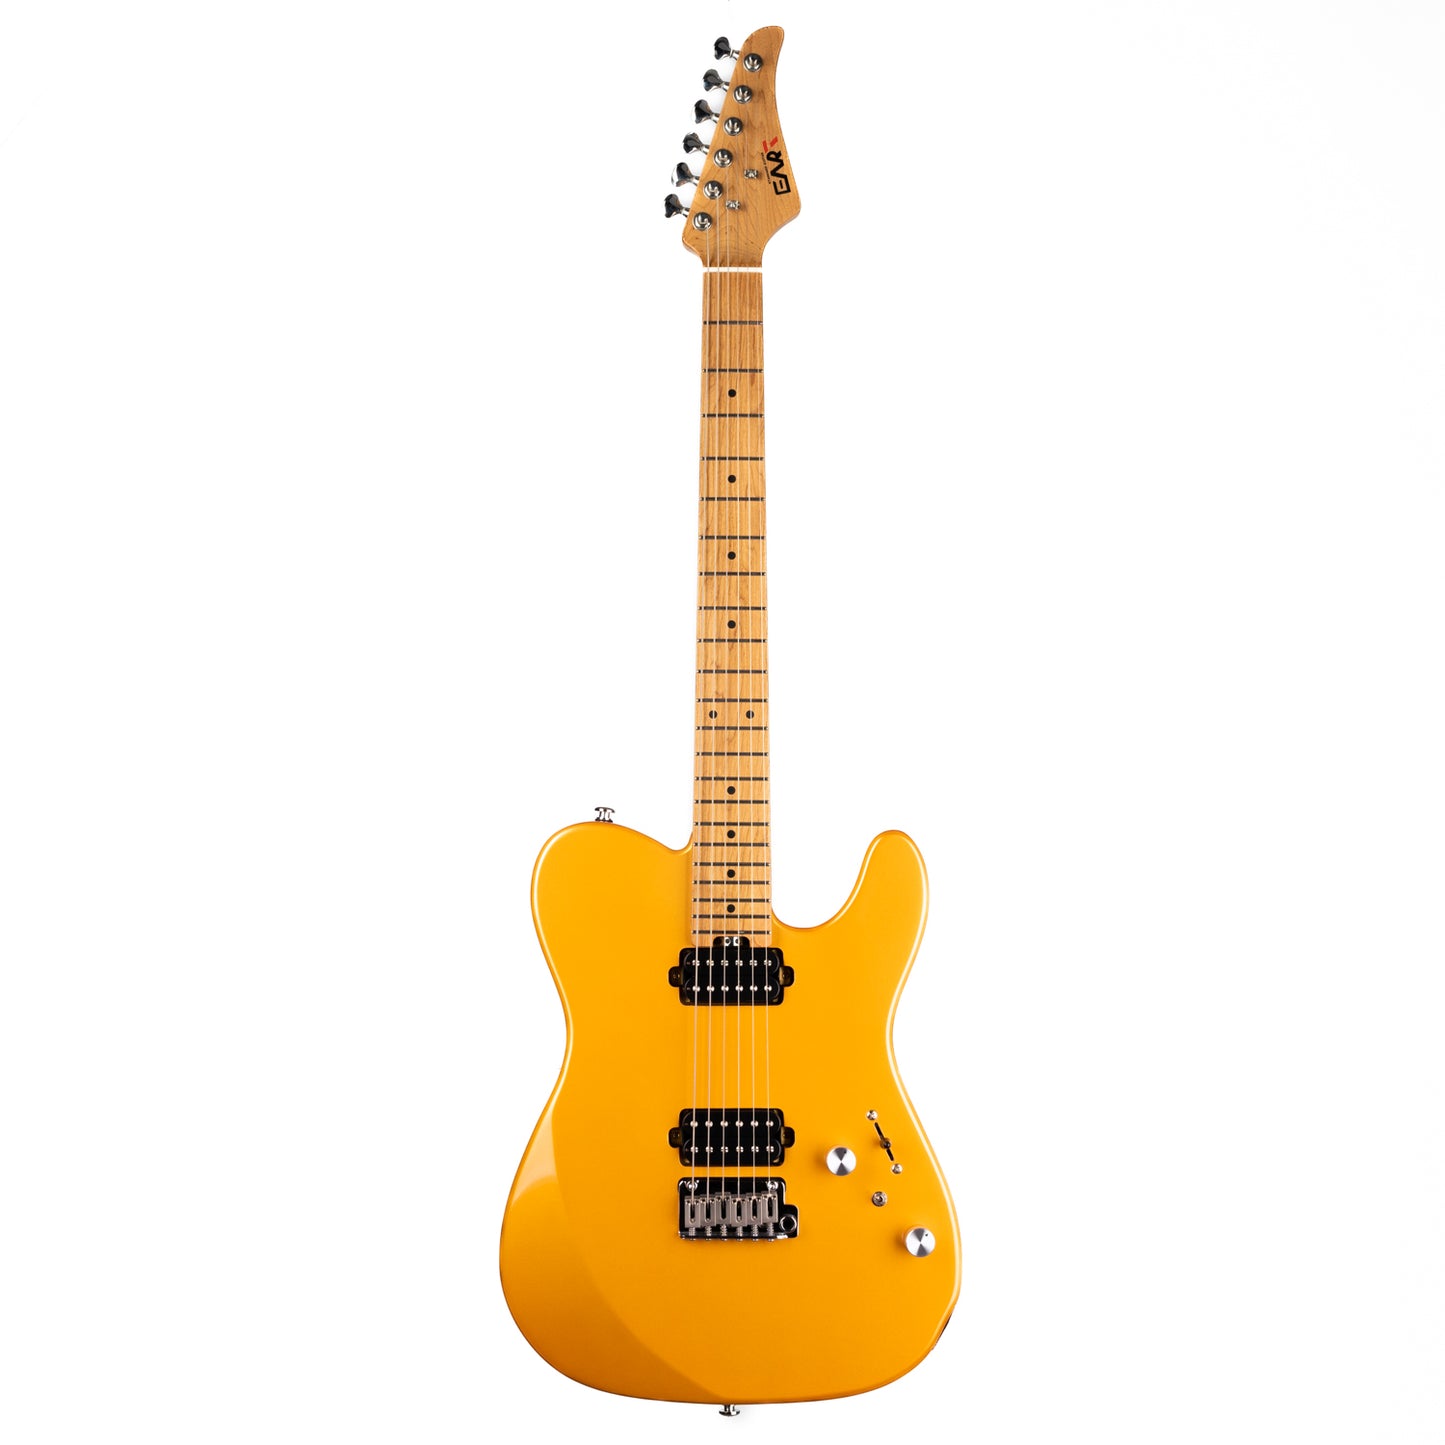 Eart Guitars, TL-380 Modern Tremolo Humbucker Pickups with Mini Switch Electric Guitars, Gold